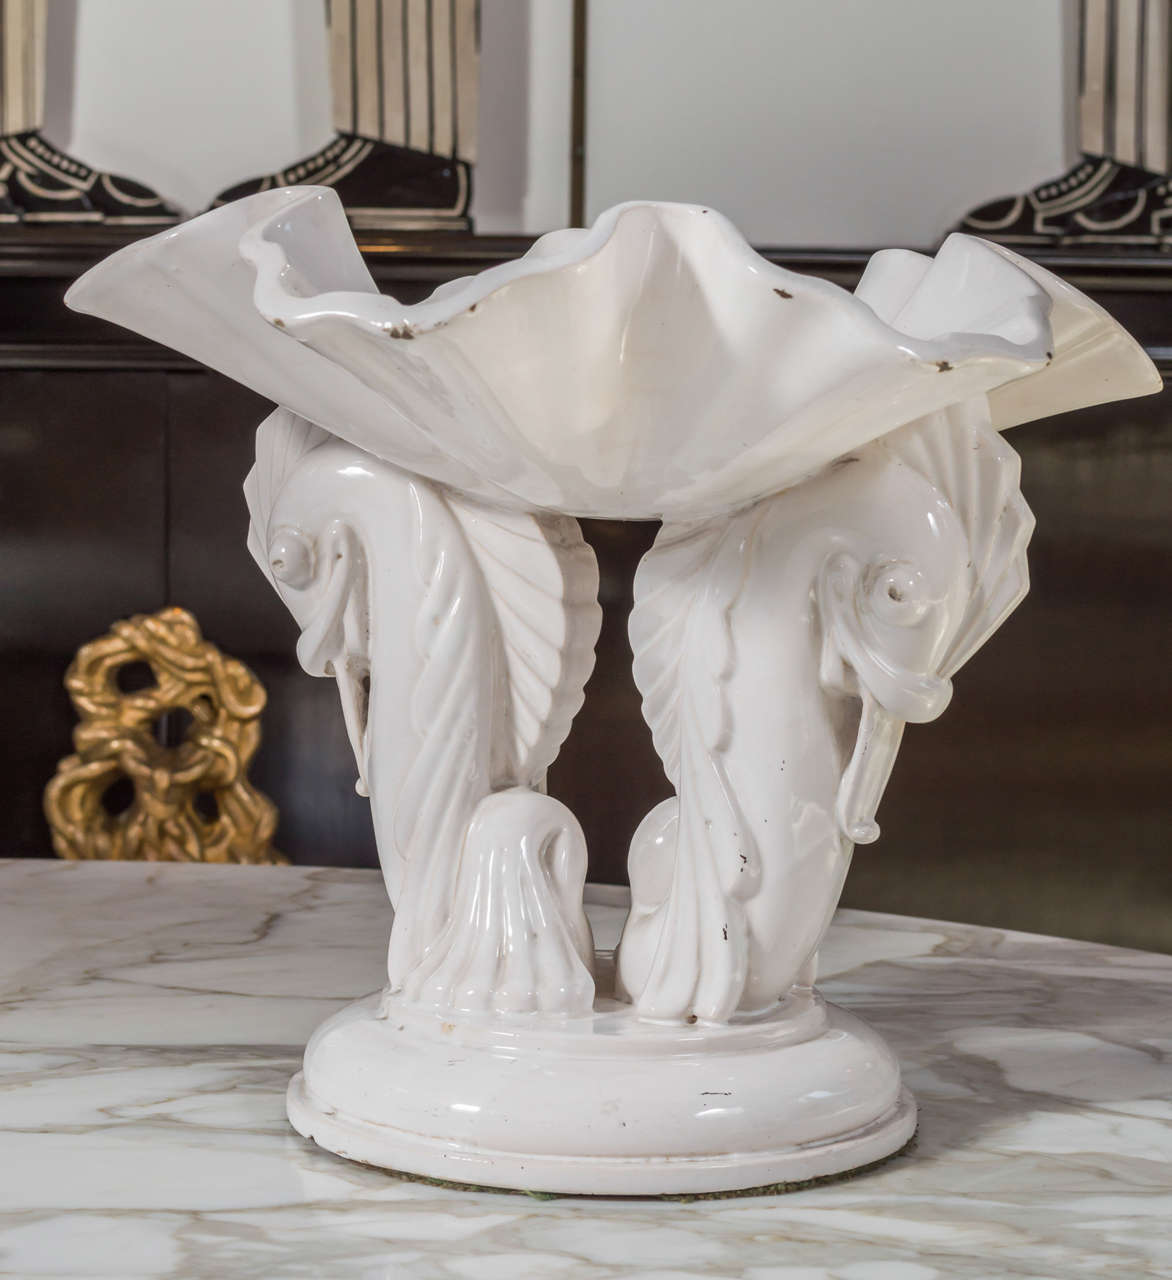 Louis Sue (1875-1968) & André Mare (1885-1932)
Elegant, white glazed ceramic bowl with Dolphin motif.
France, circa 1930.
Literature: 
F.Camard, 